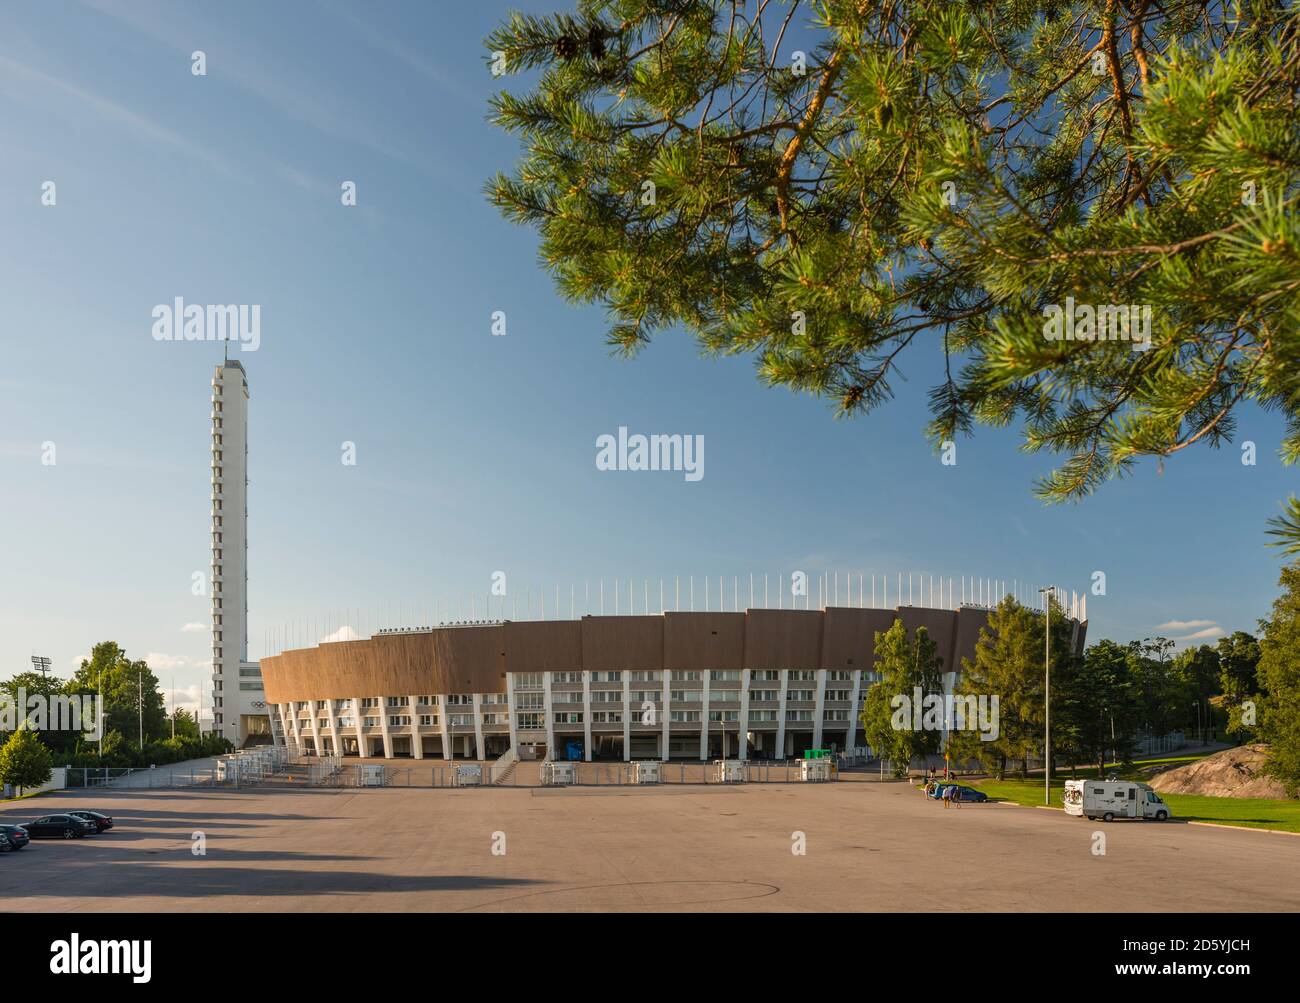 Finlande, Helsinki, vue sur le stade olympique Banque D'Images